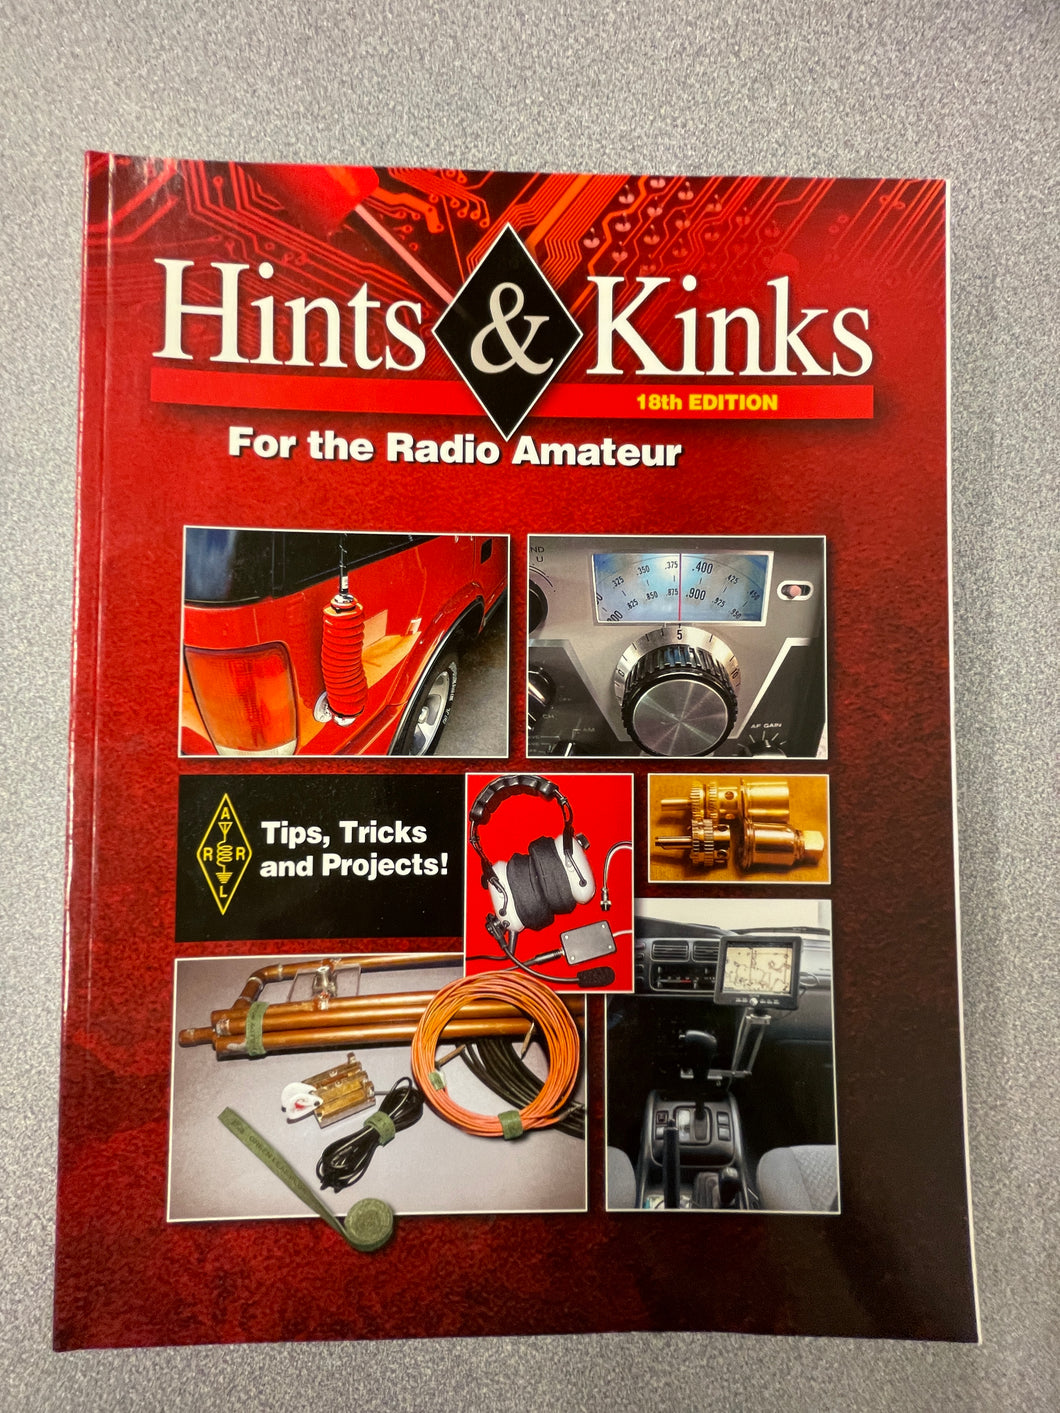 Hints & Kinks For the Radio Amateur, 18th Edition, Ford, Steve, ed. [2016] CG 2/24